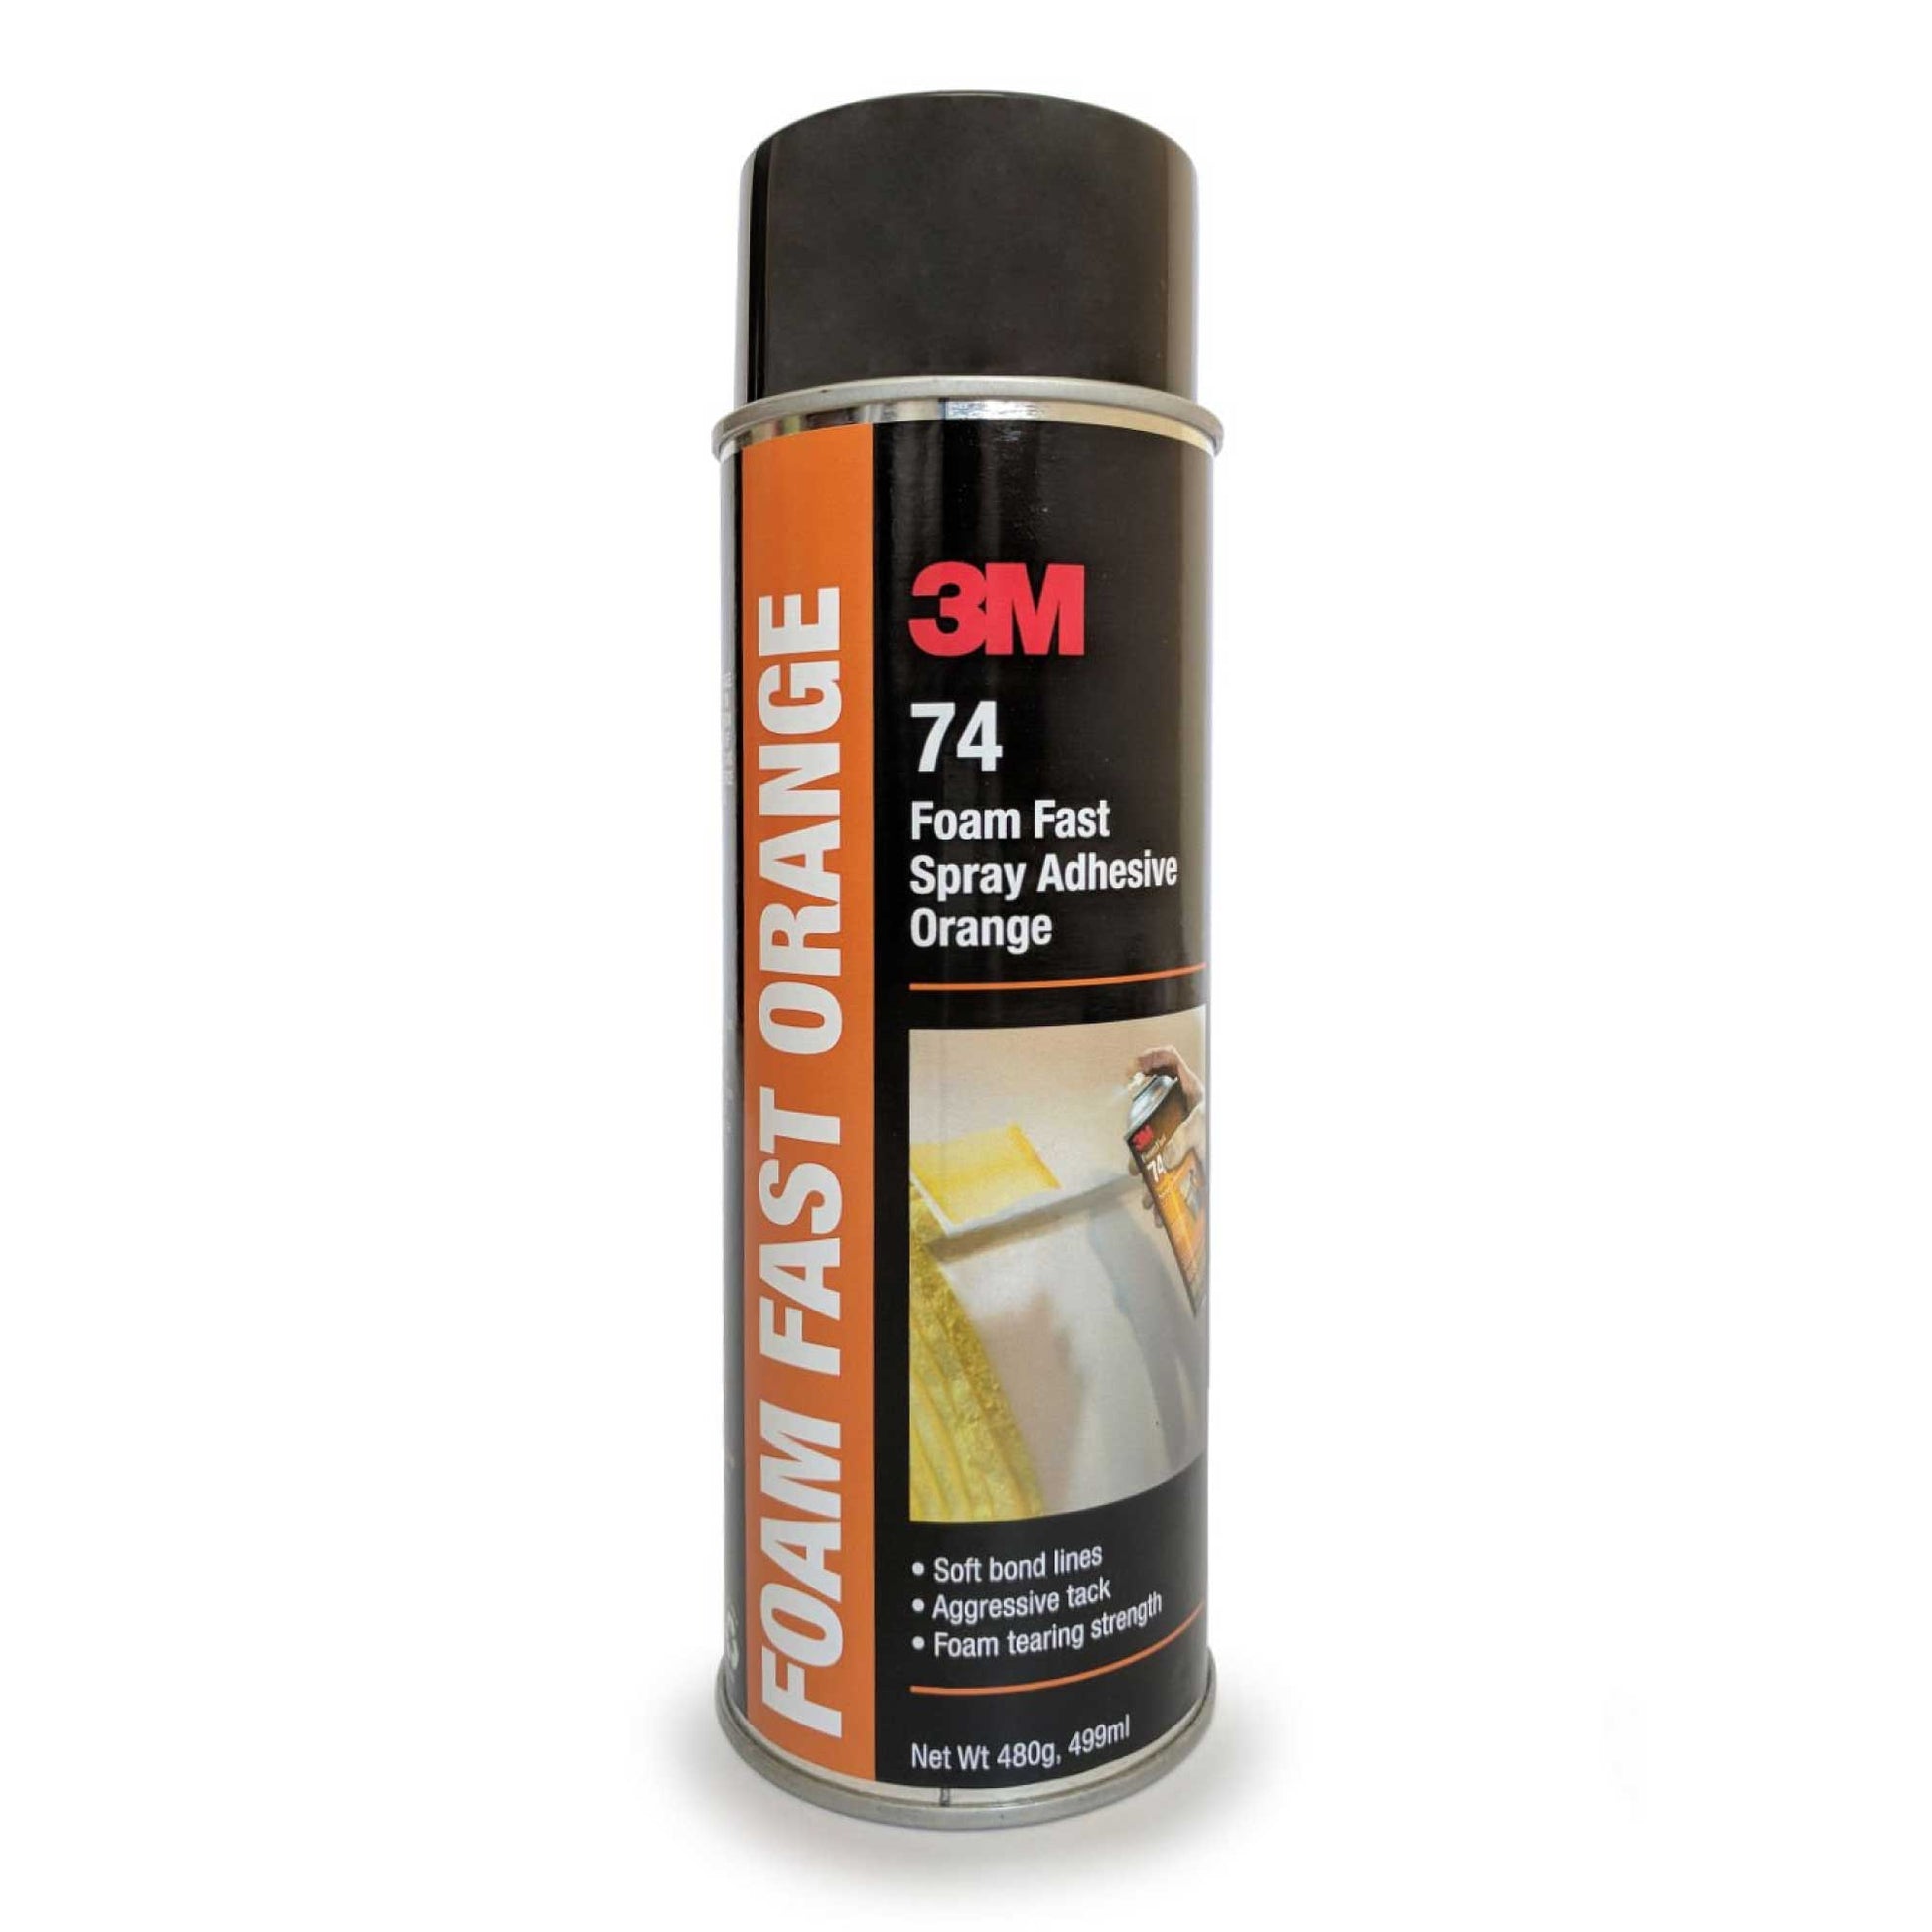 3M 74 Foam Fast Spray Adhesive 499ml Orange Fabric Fast Drying Instant Bond Glue